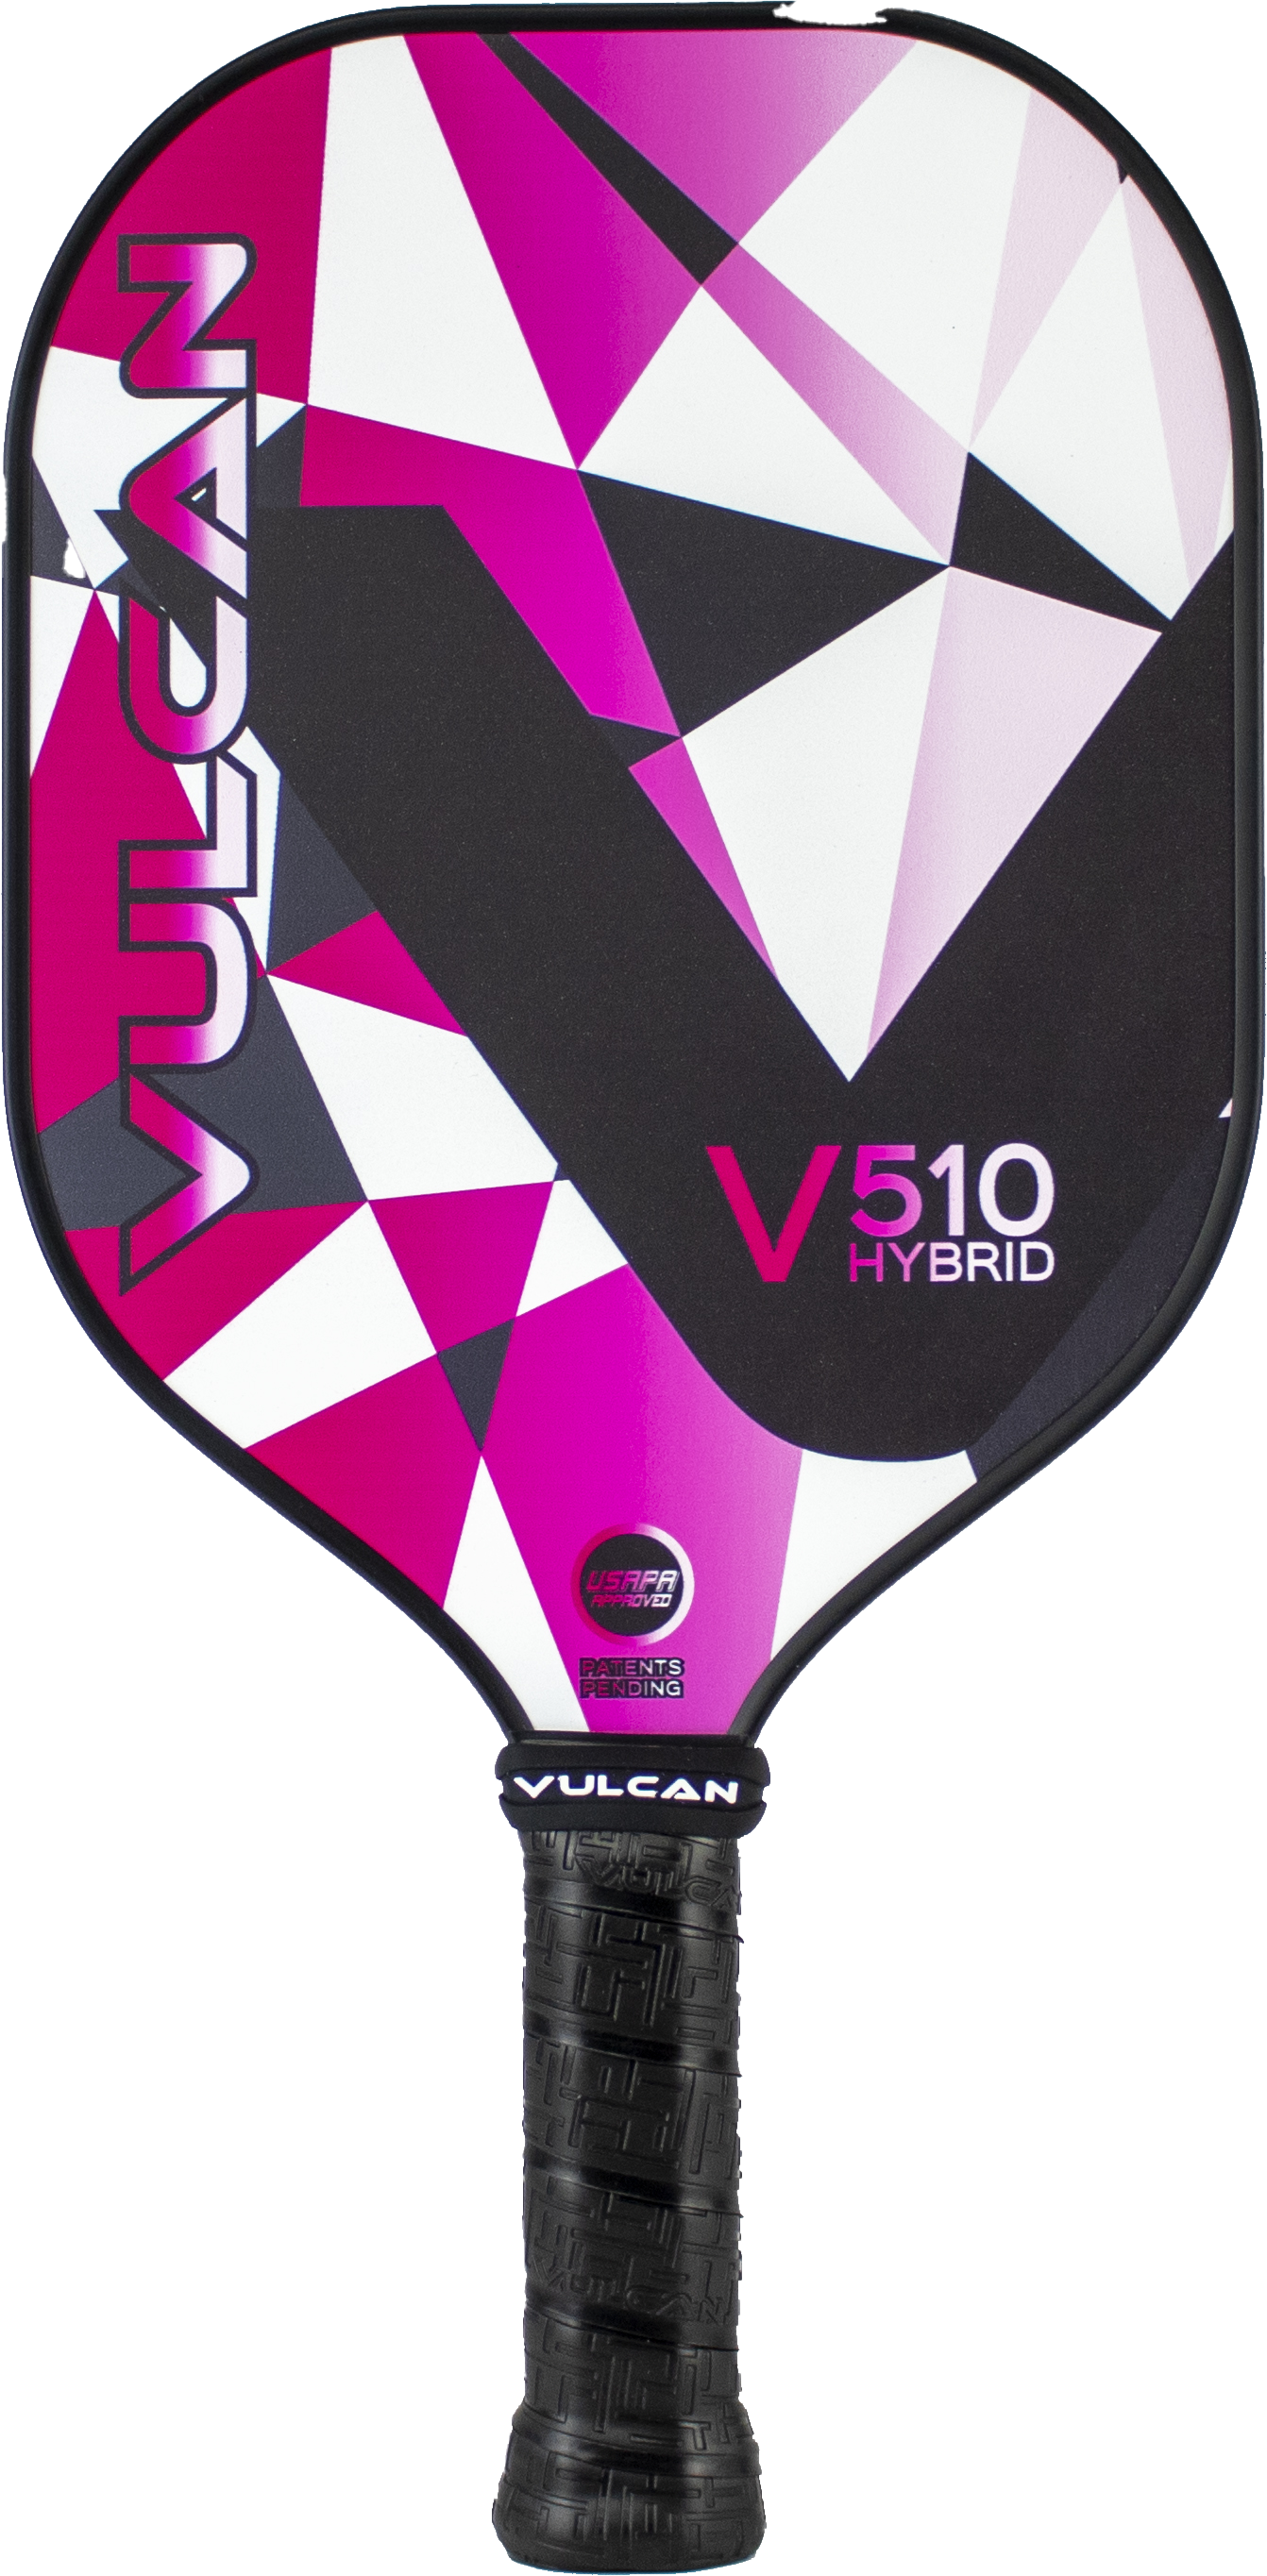 Vulcan V510 Hybrid Pickleball Paddle Pink Geo